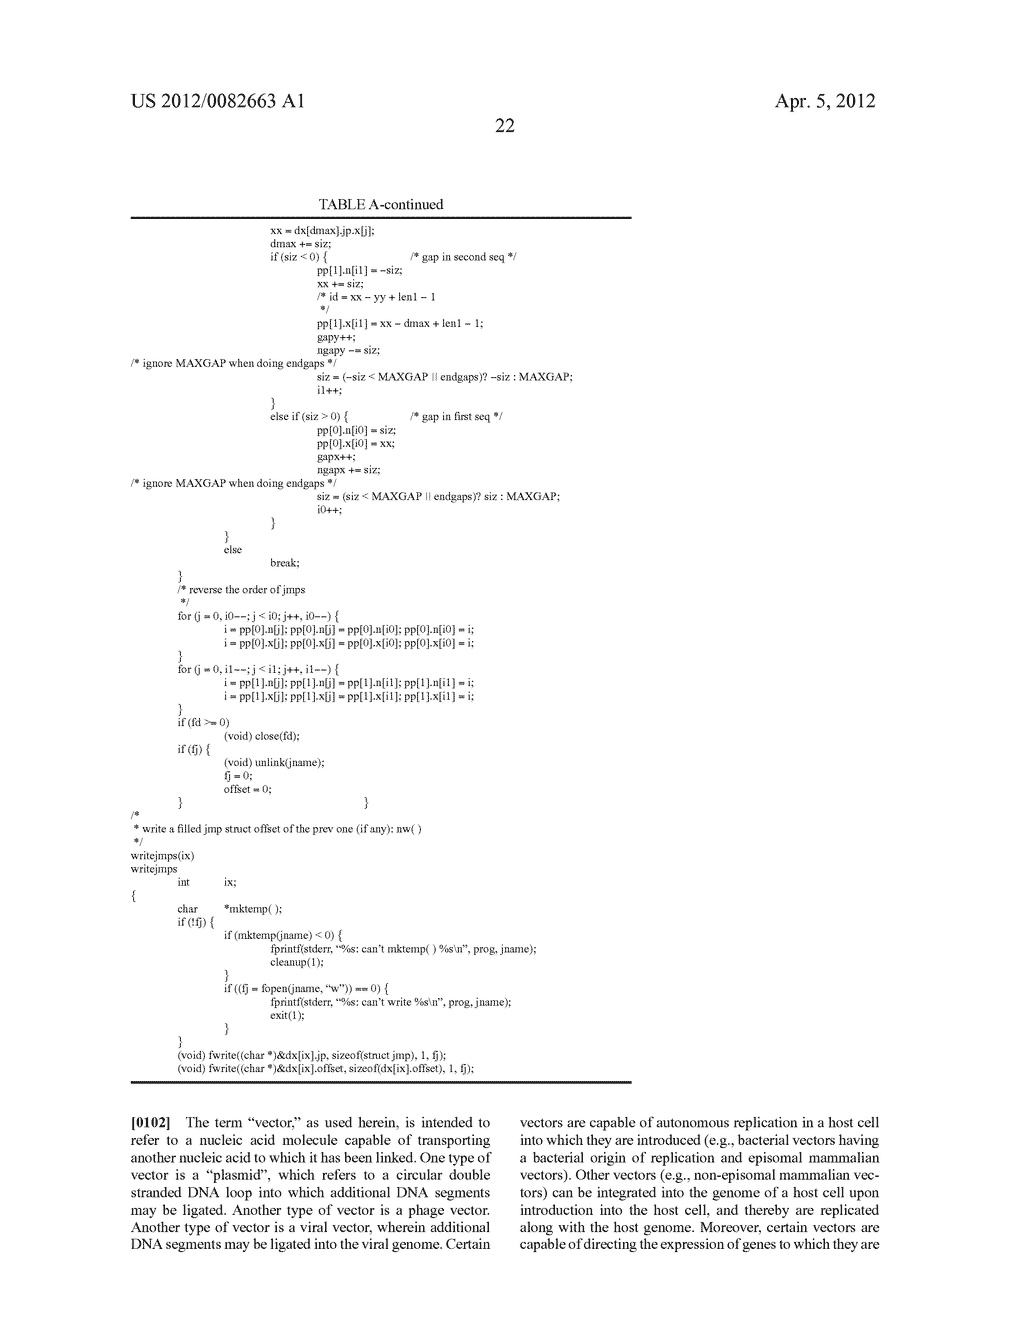 ANTI-CMET ANTAGONISTS - diagram, schematic, and image 37